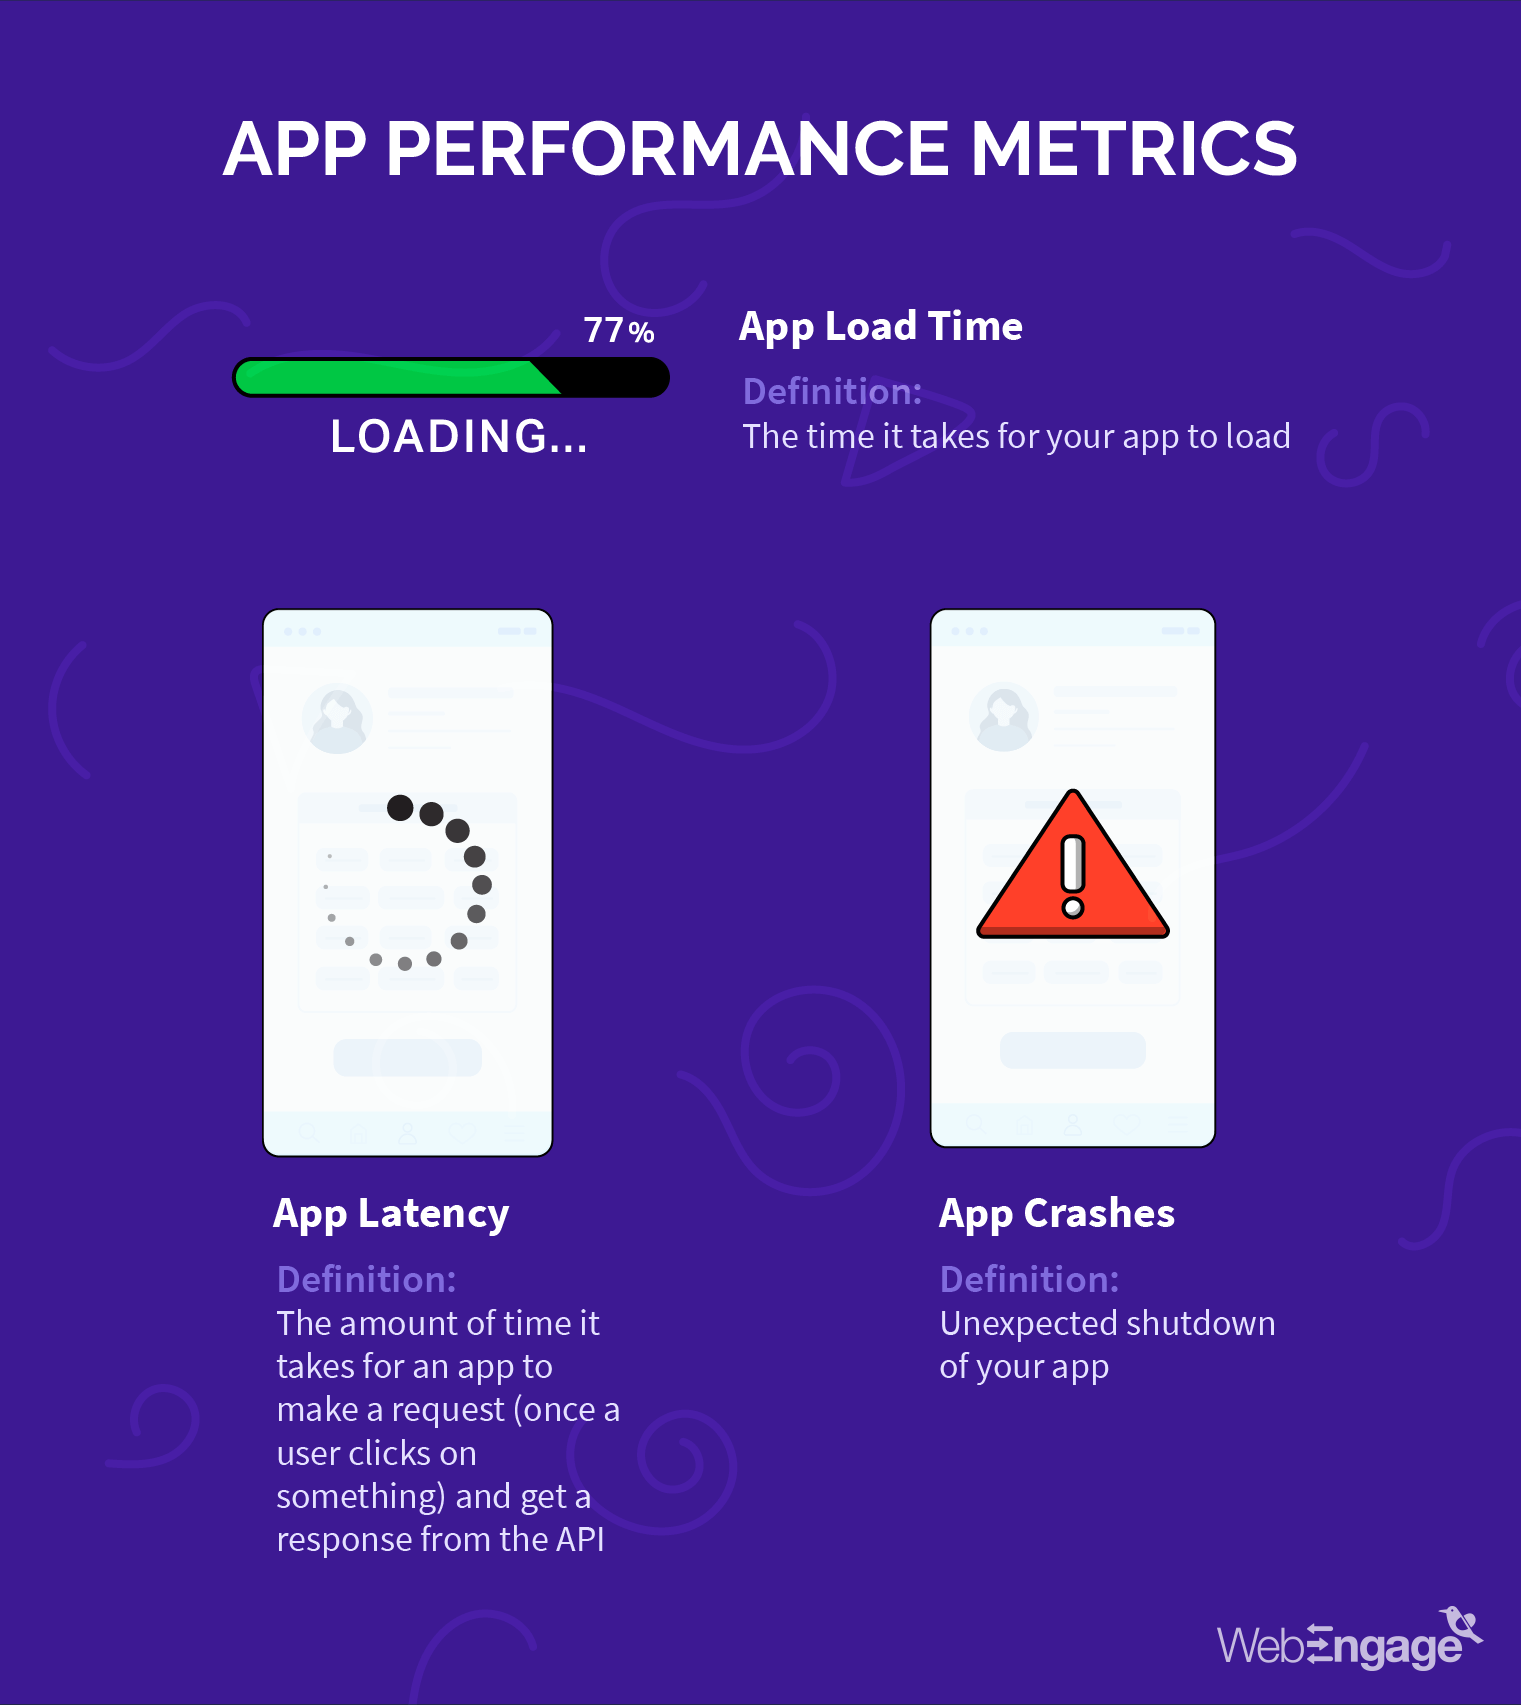 App Performance Metrics With WebEngage